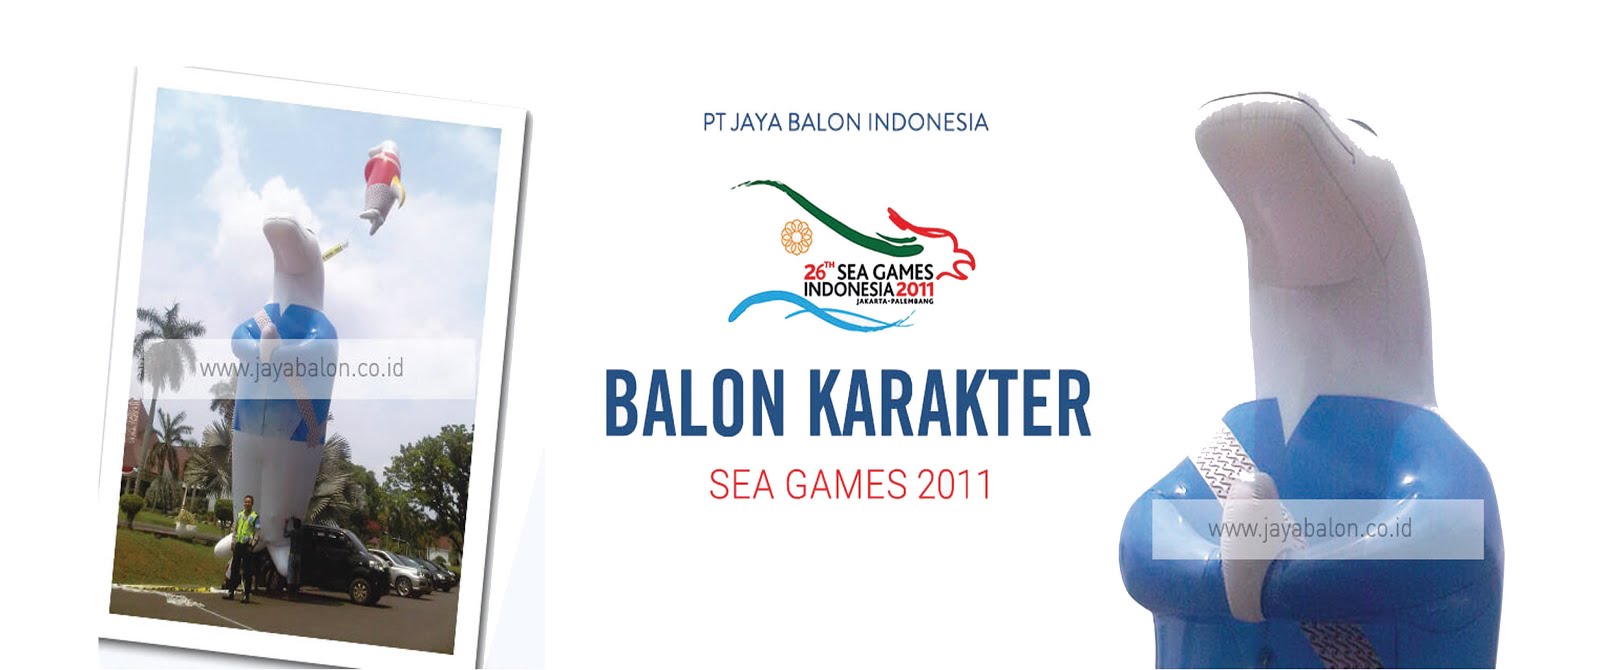 Balon Karakter SEA GAMES 2011